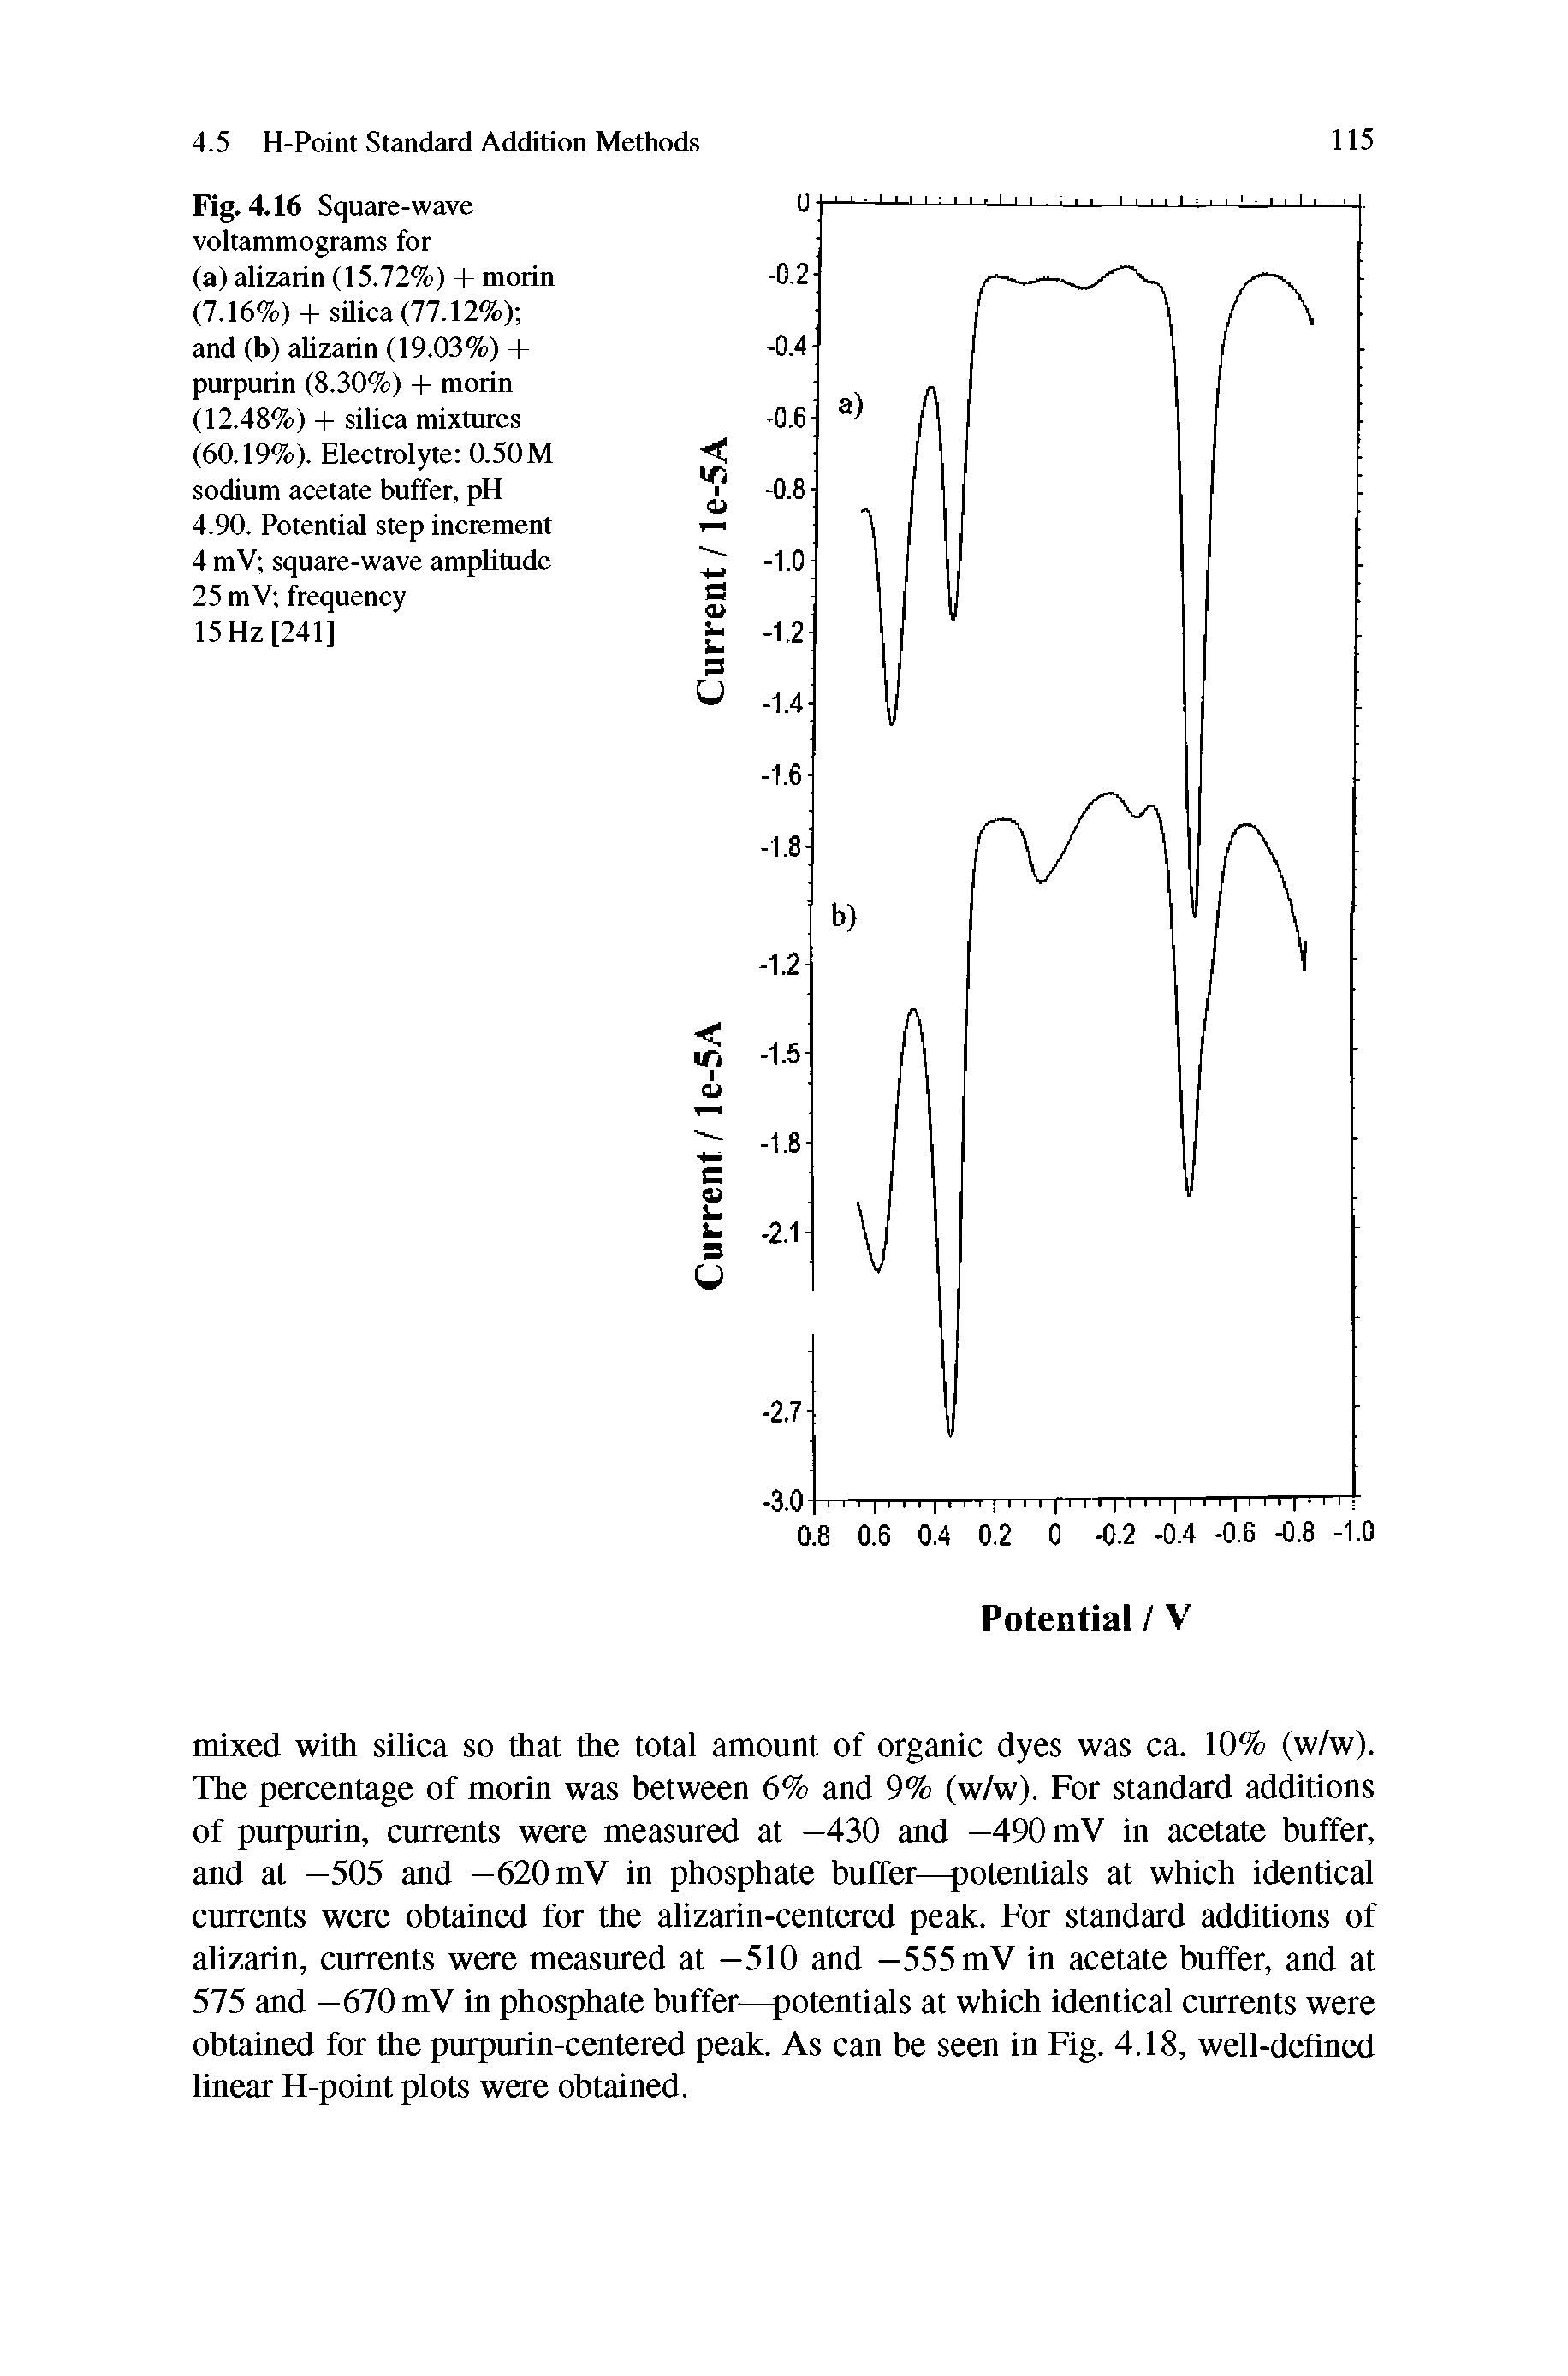 Fig. 4.16 Square-wave voltammograms for (a) alizarin (15.72%) + morin (7.16%) -I- silica (77.12%) and (b) alizarin (19.03%) + purpurin (8.30%) -I- raorin (12.48%) -I- silica mixtures (60.19%). Electrolyte 0.50M sodium acetate buffer, pH 4.90. Potential step increment 4 mV square-wave amplitude 25 mV frequency 15 Hz [241]...